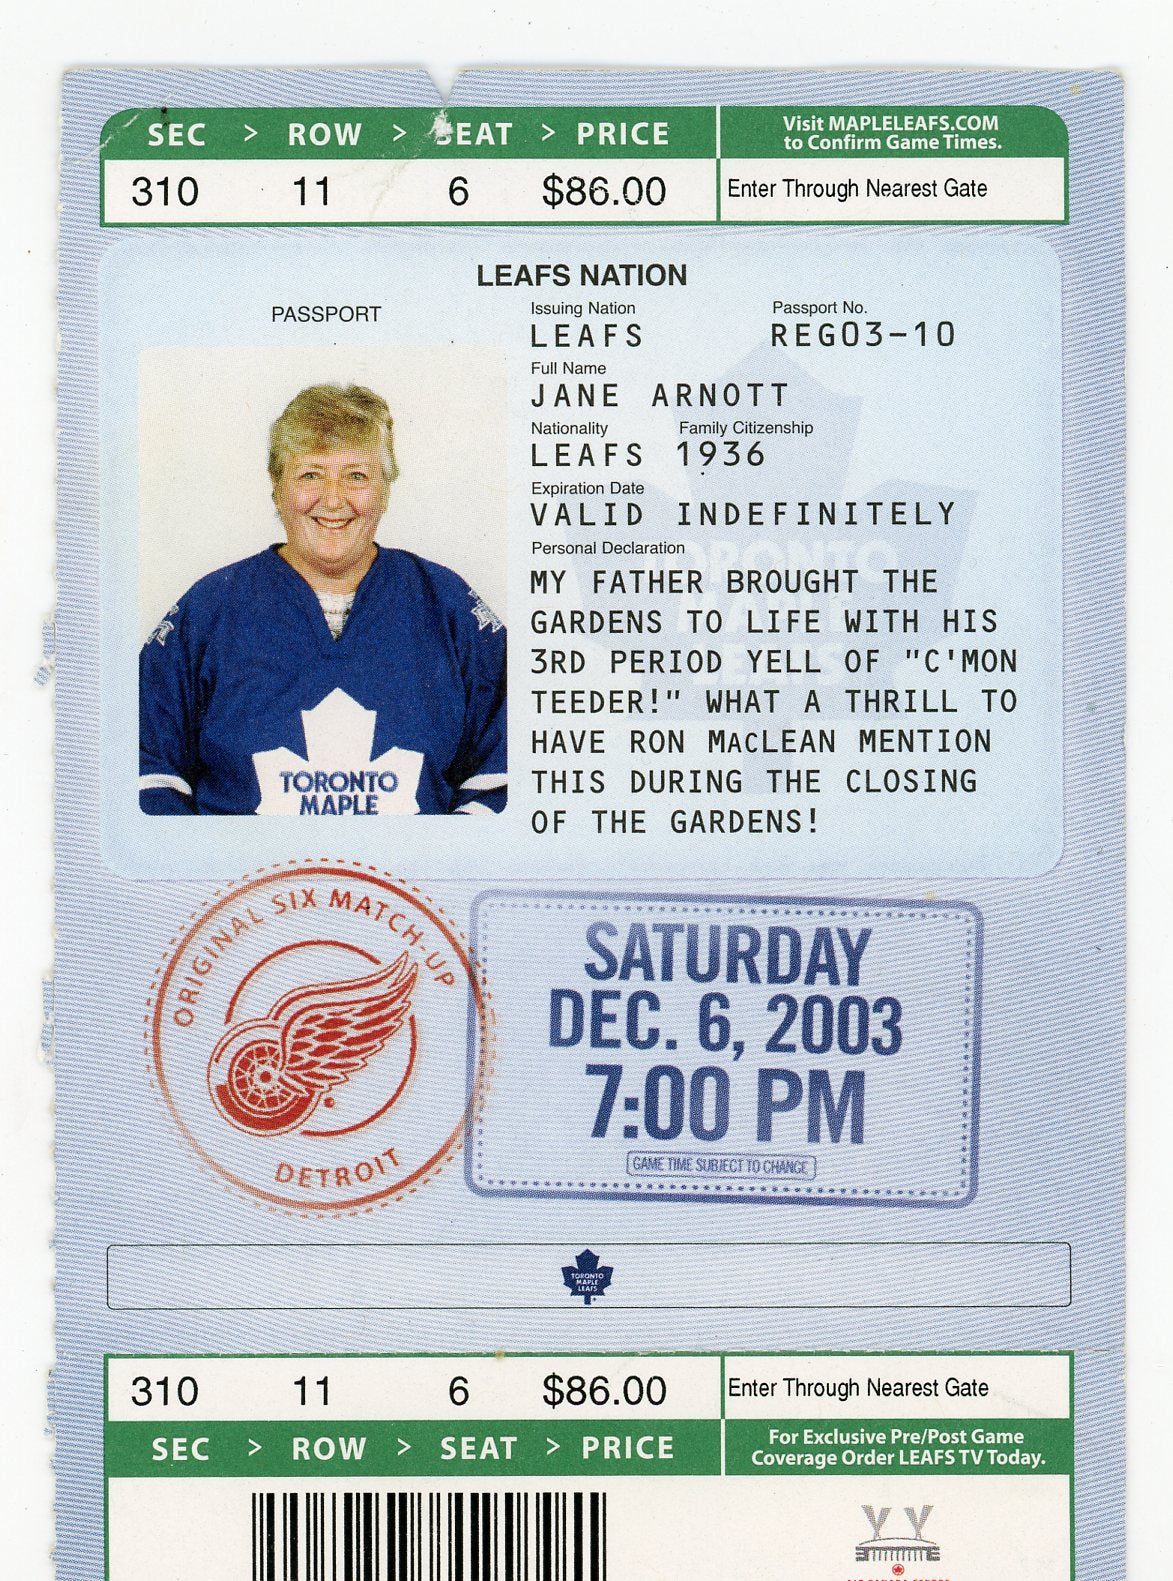 Toronto Maple Leafs vs. Detroit Red Wings Passport Ticket Stub Maple Leaf Gardens (Toronto, 2003)